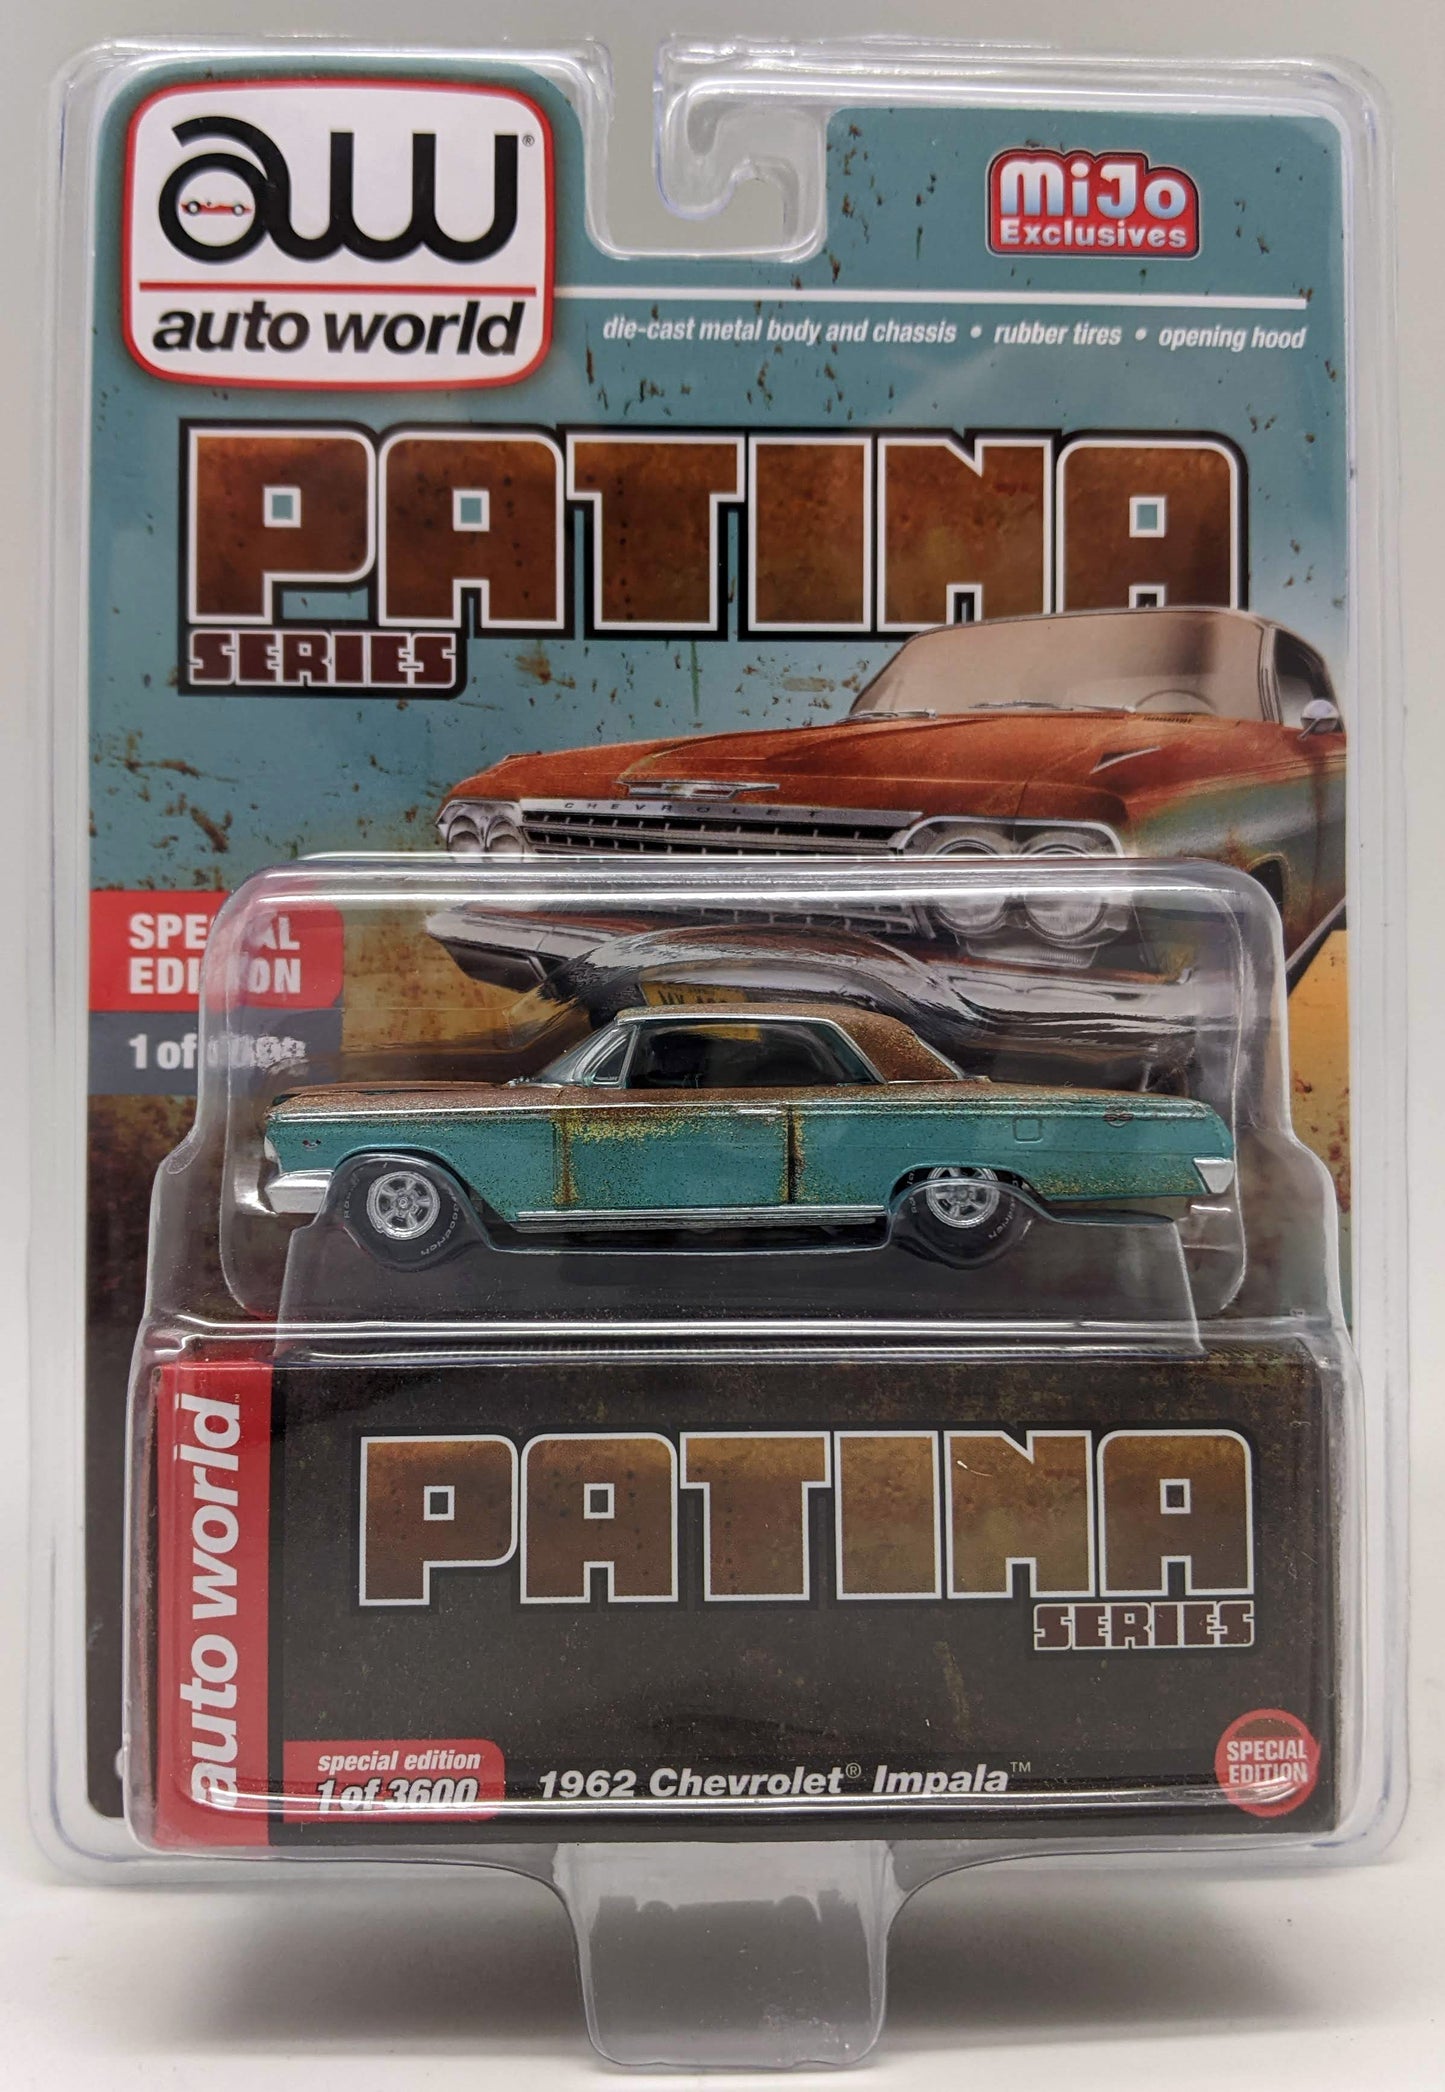 AW 1962 Chevrolet Impala - MiJo Exclusive Patina Series